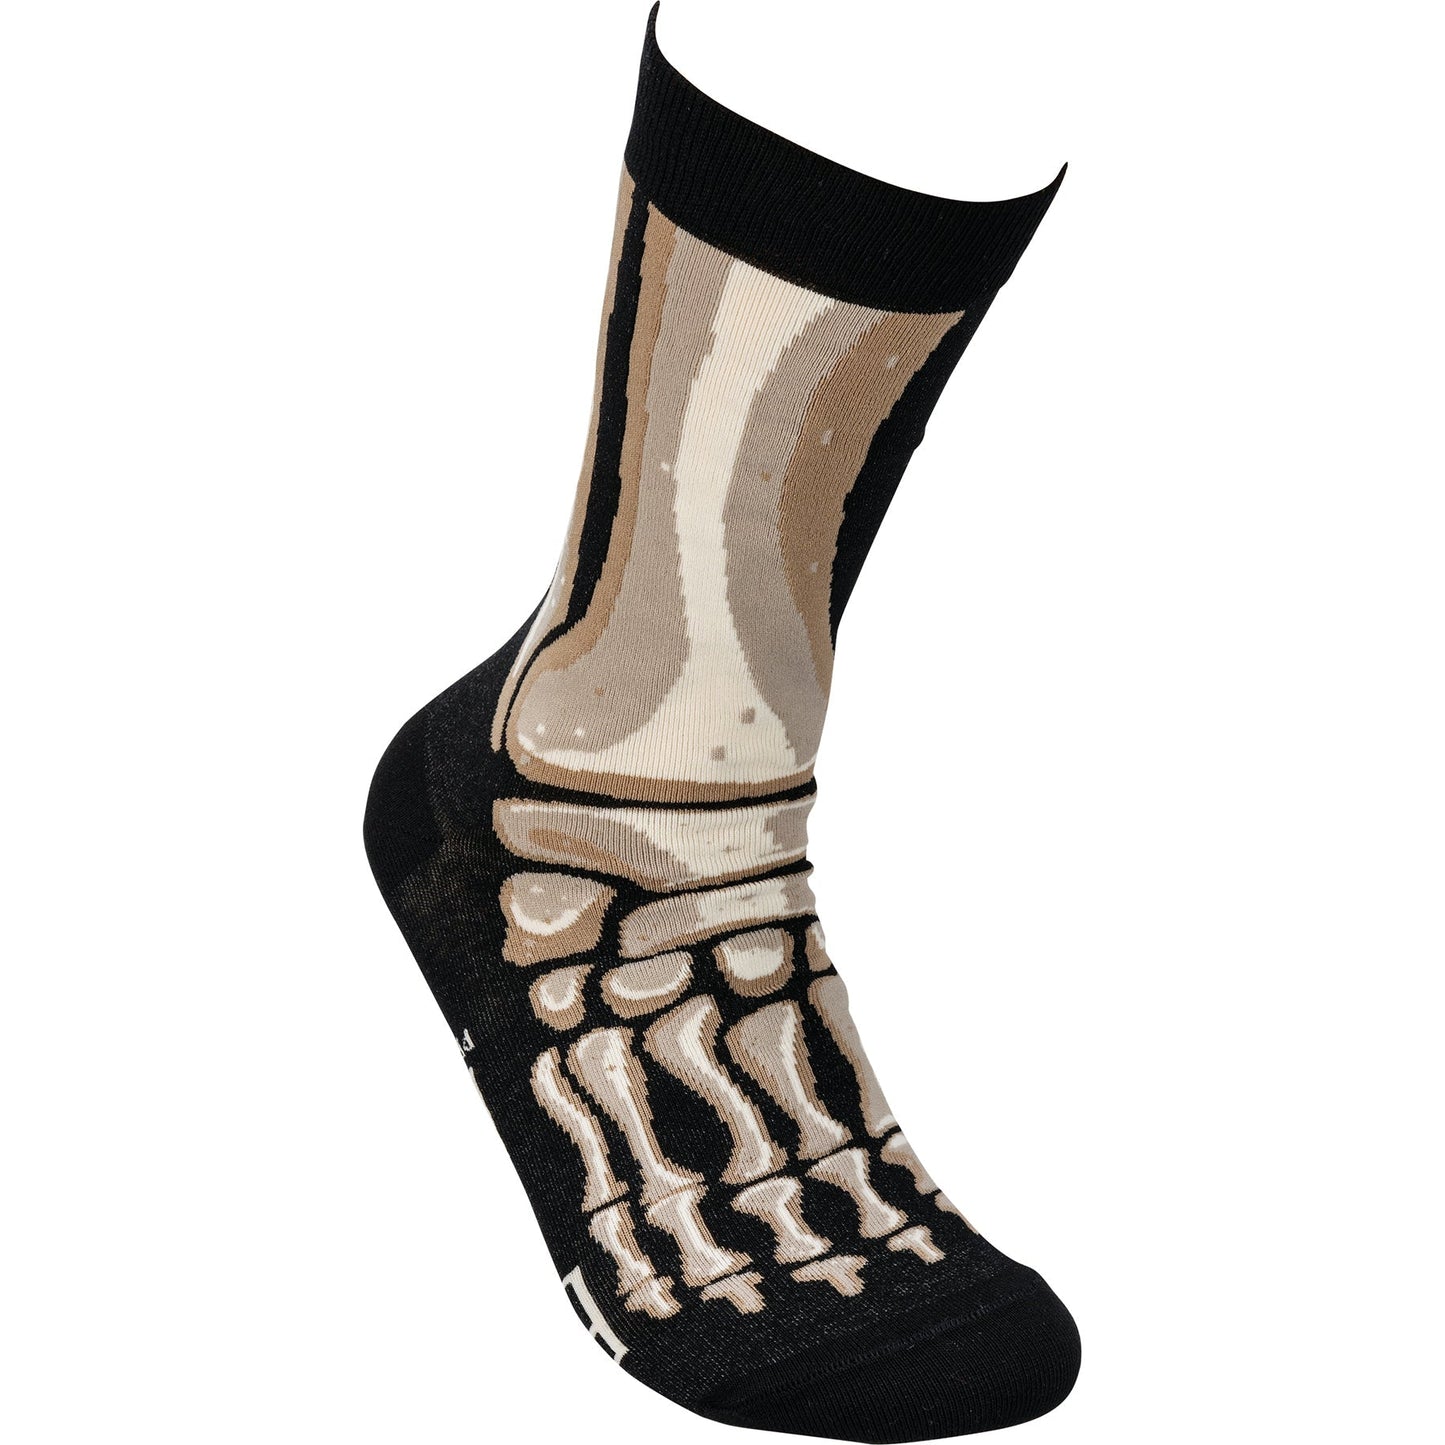 Bad To The Bone Socks in Skeleton Leg Designs | Fun Halloween Themed Novelty Socks